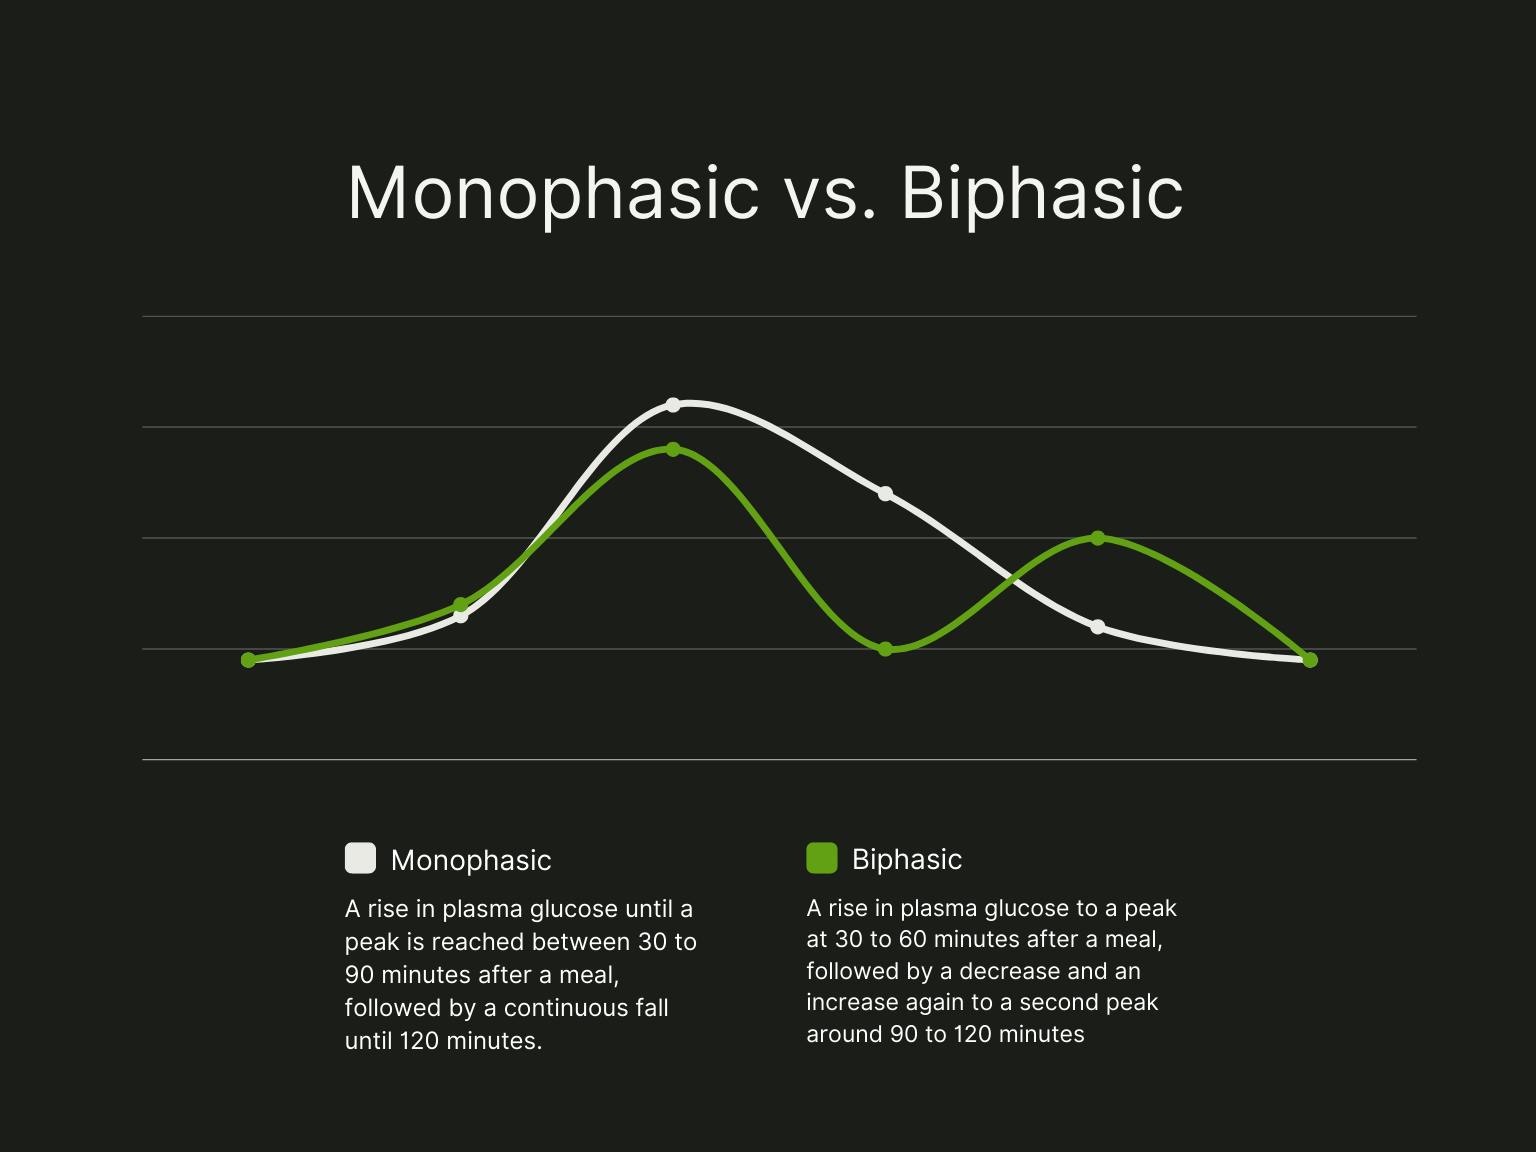 monophasic vs. biphasic curve depiction